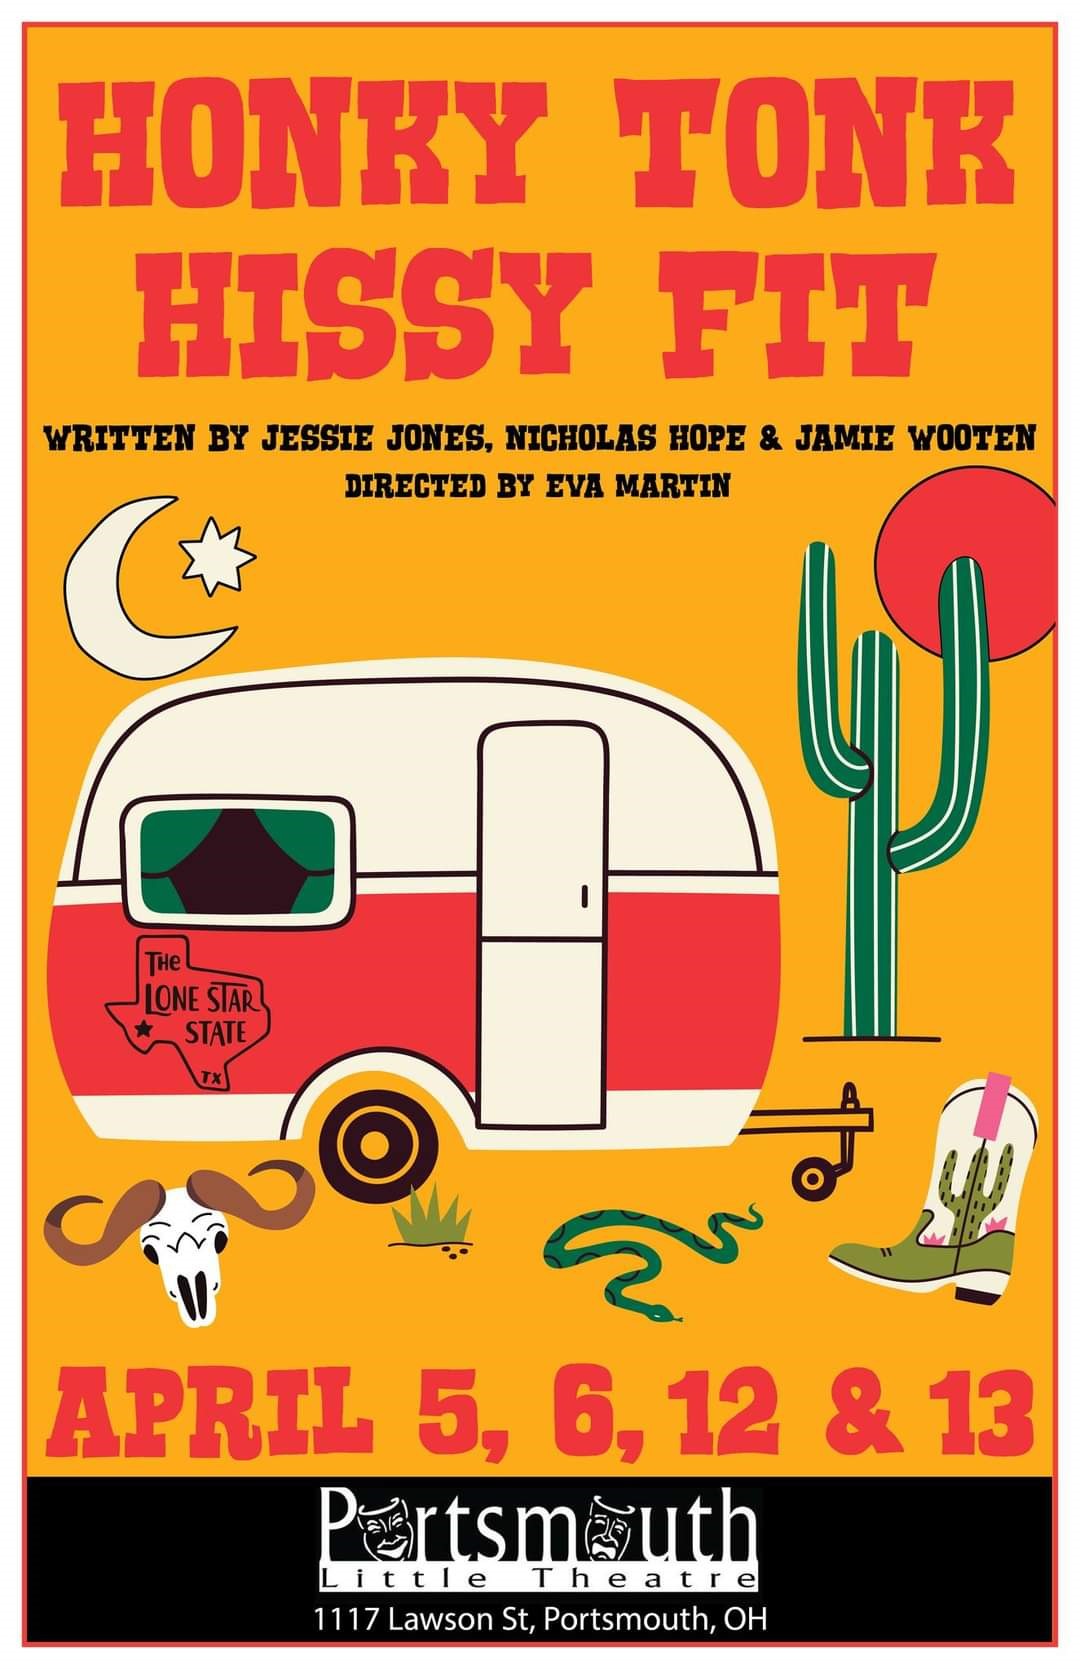 Honky Tonk Hissy Fit  on abr. 12, 19:30@Portsmouth Little Theatre - Elegir asientoCompra entradas y obtén información enPortsmouth Little Theatre 